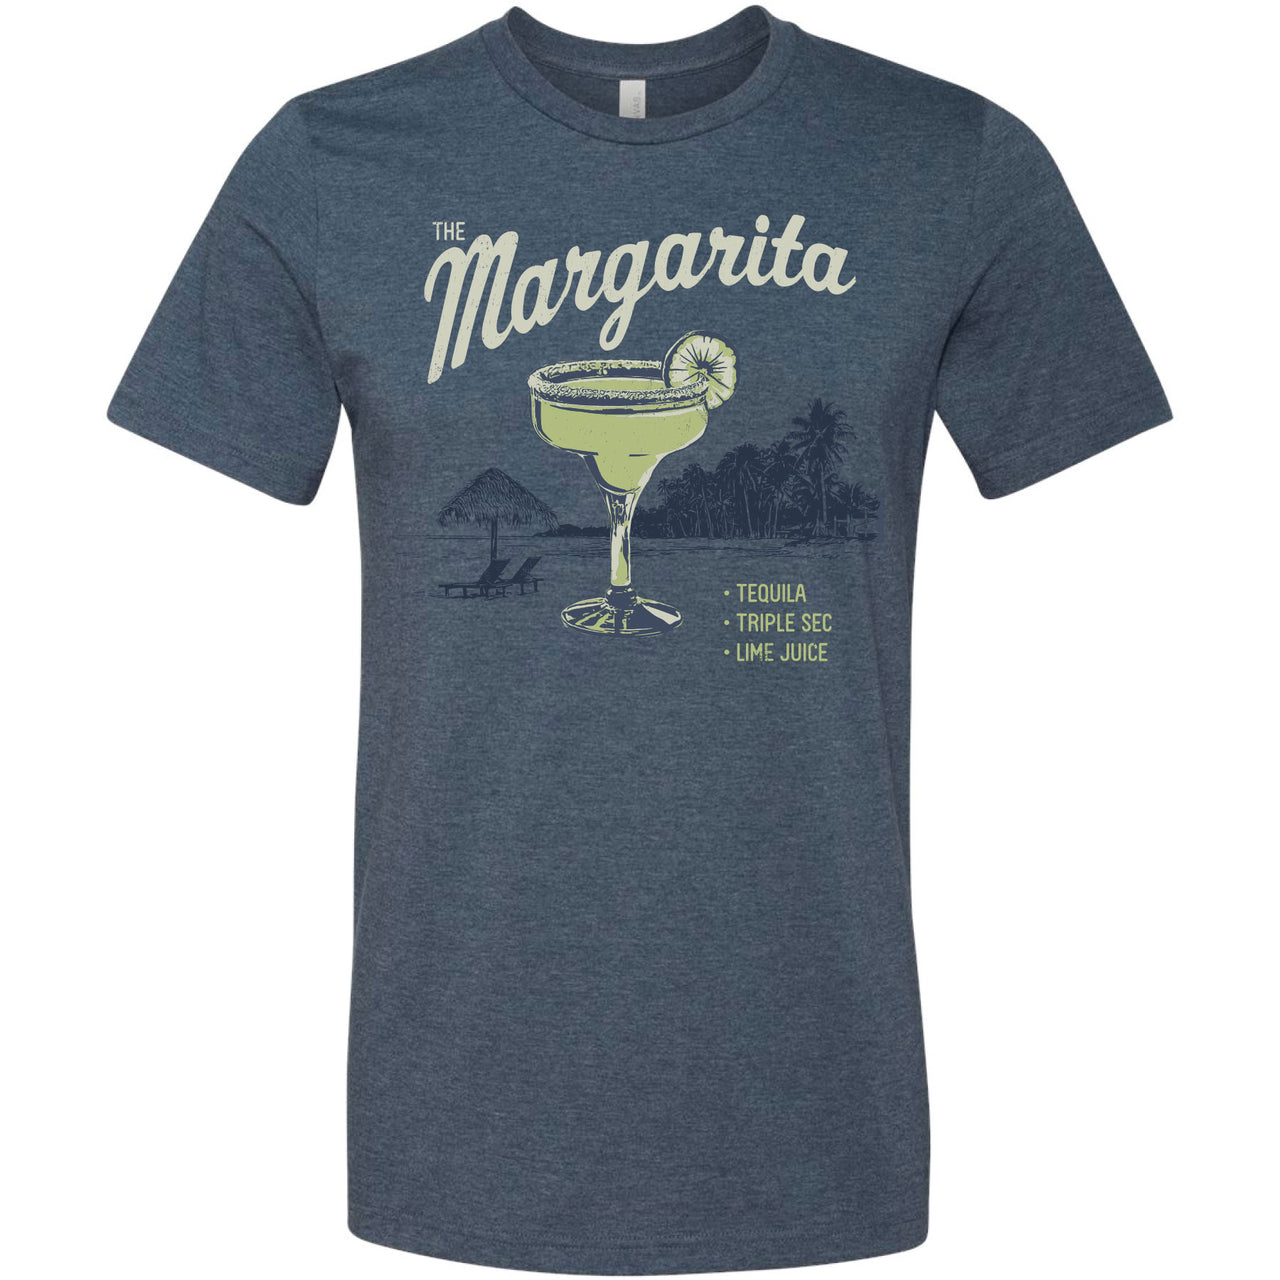 Margarita Mixed Drink T-shirt